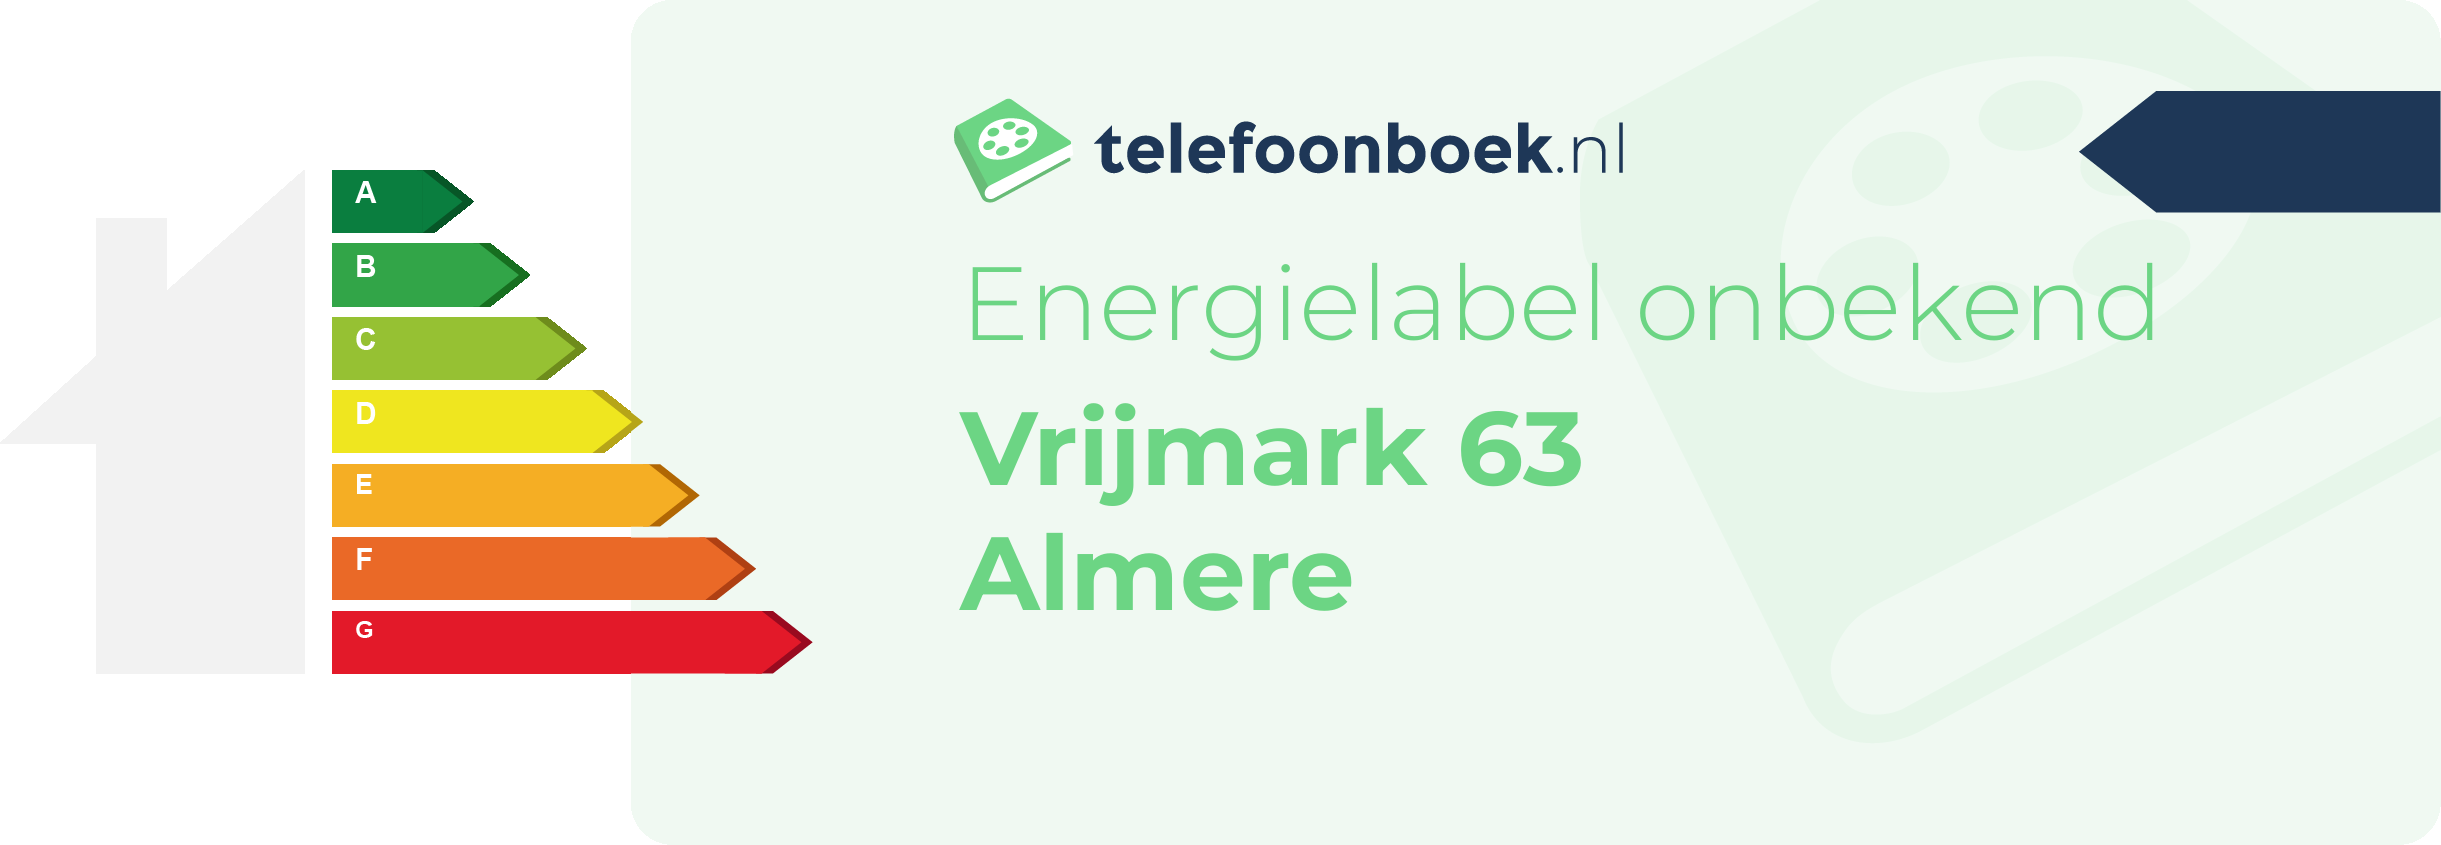 Energielabel Vrijmark 63 Almere